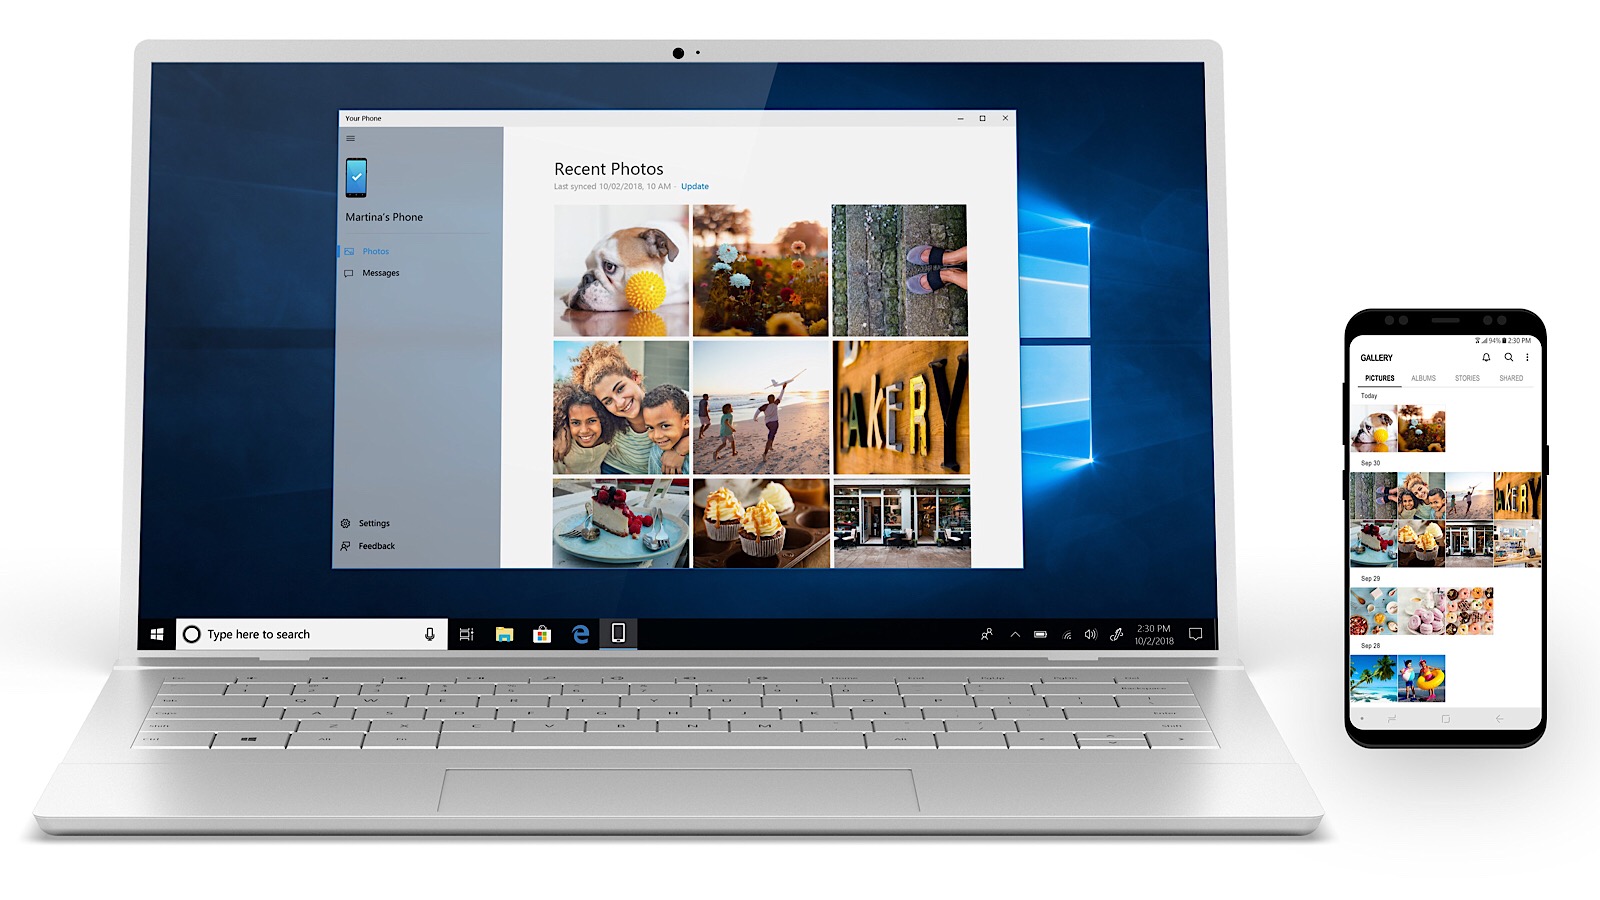 Microsoft's Windows 10 October update links phone to Windows PC